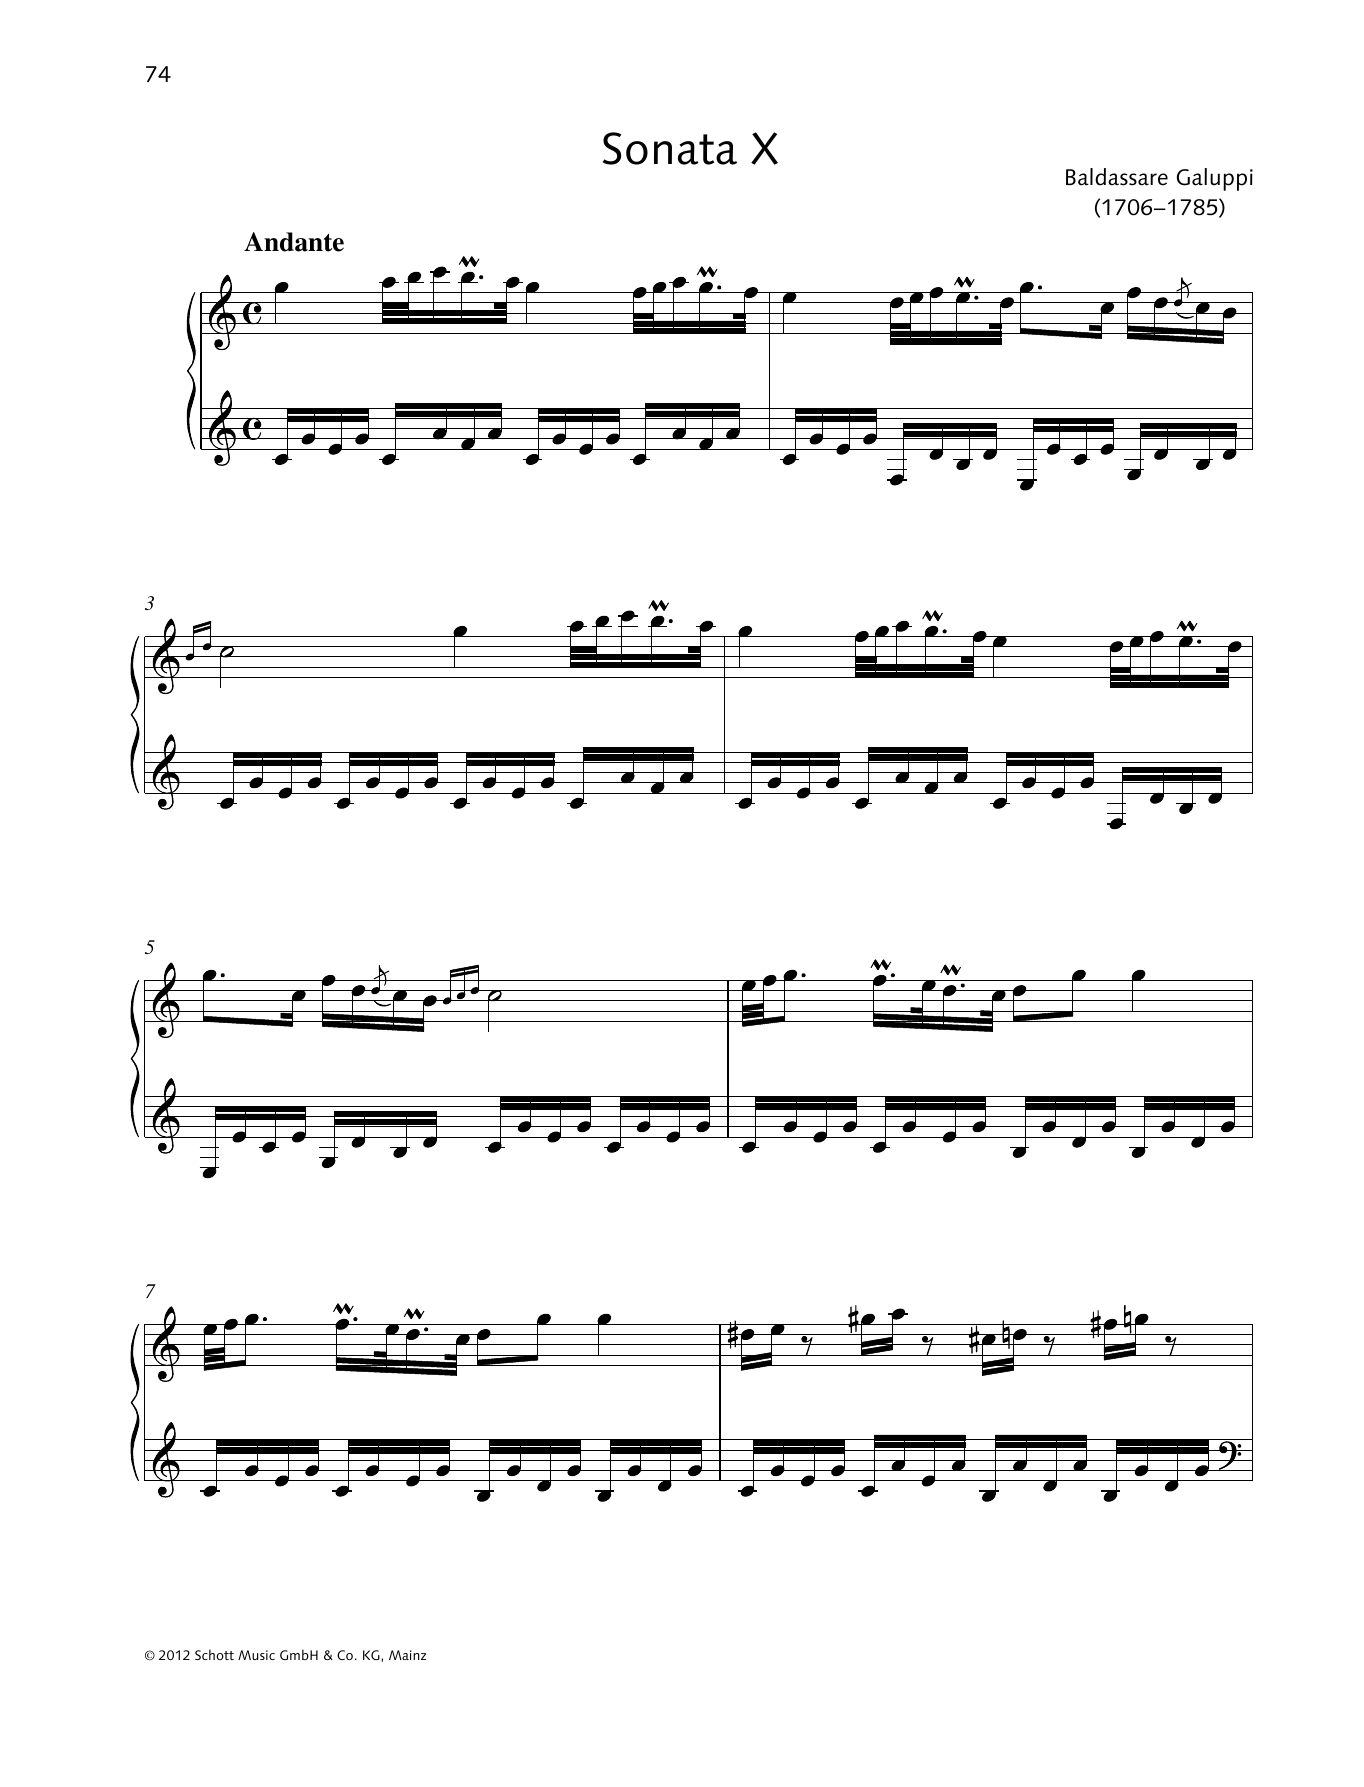 Baldassare Galuppi Sonata X C major Sheet Music Notes & Chords for Piano Solo - Download or Print PDF